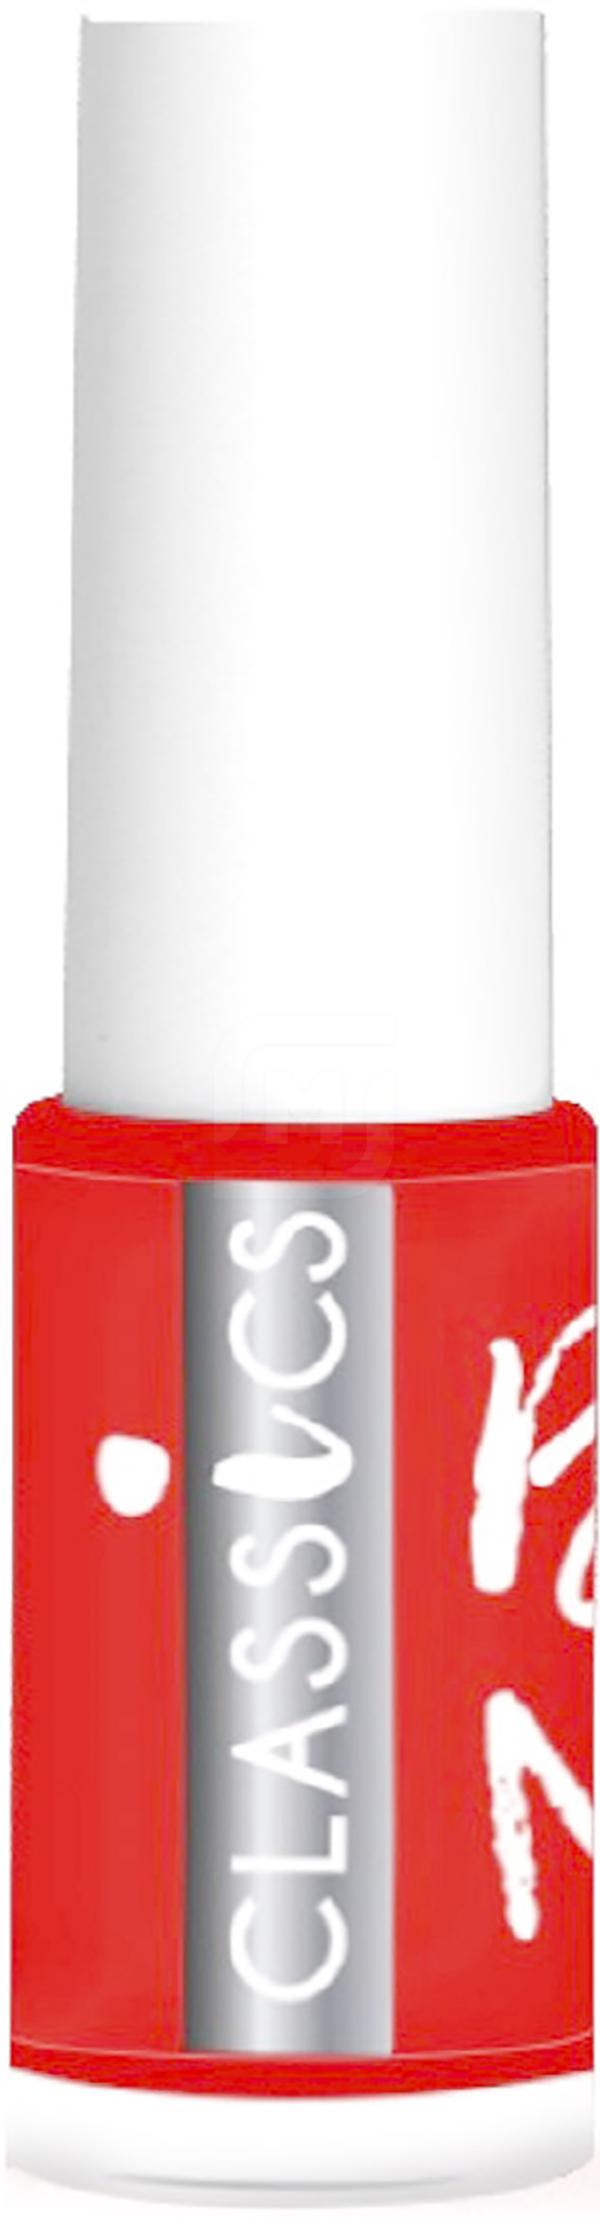 фото Лак для ногтей classics mini bio nail тон 310 красный 6 мл